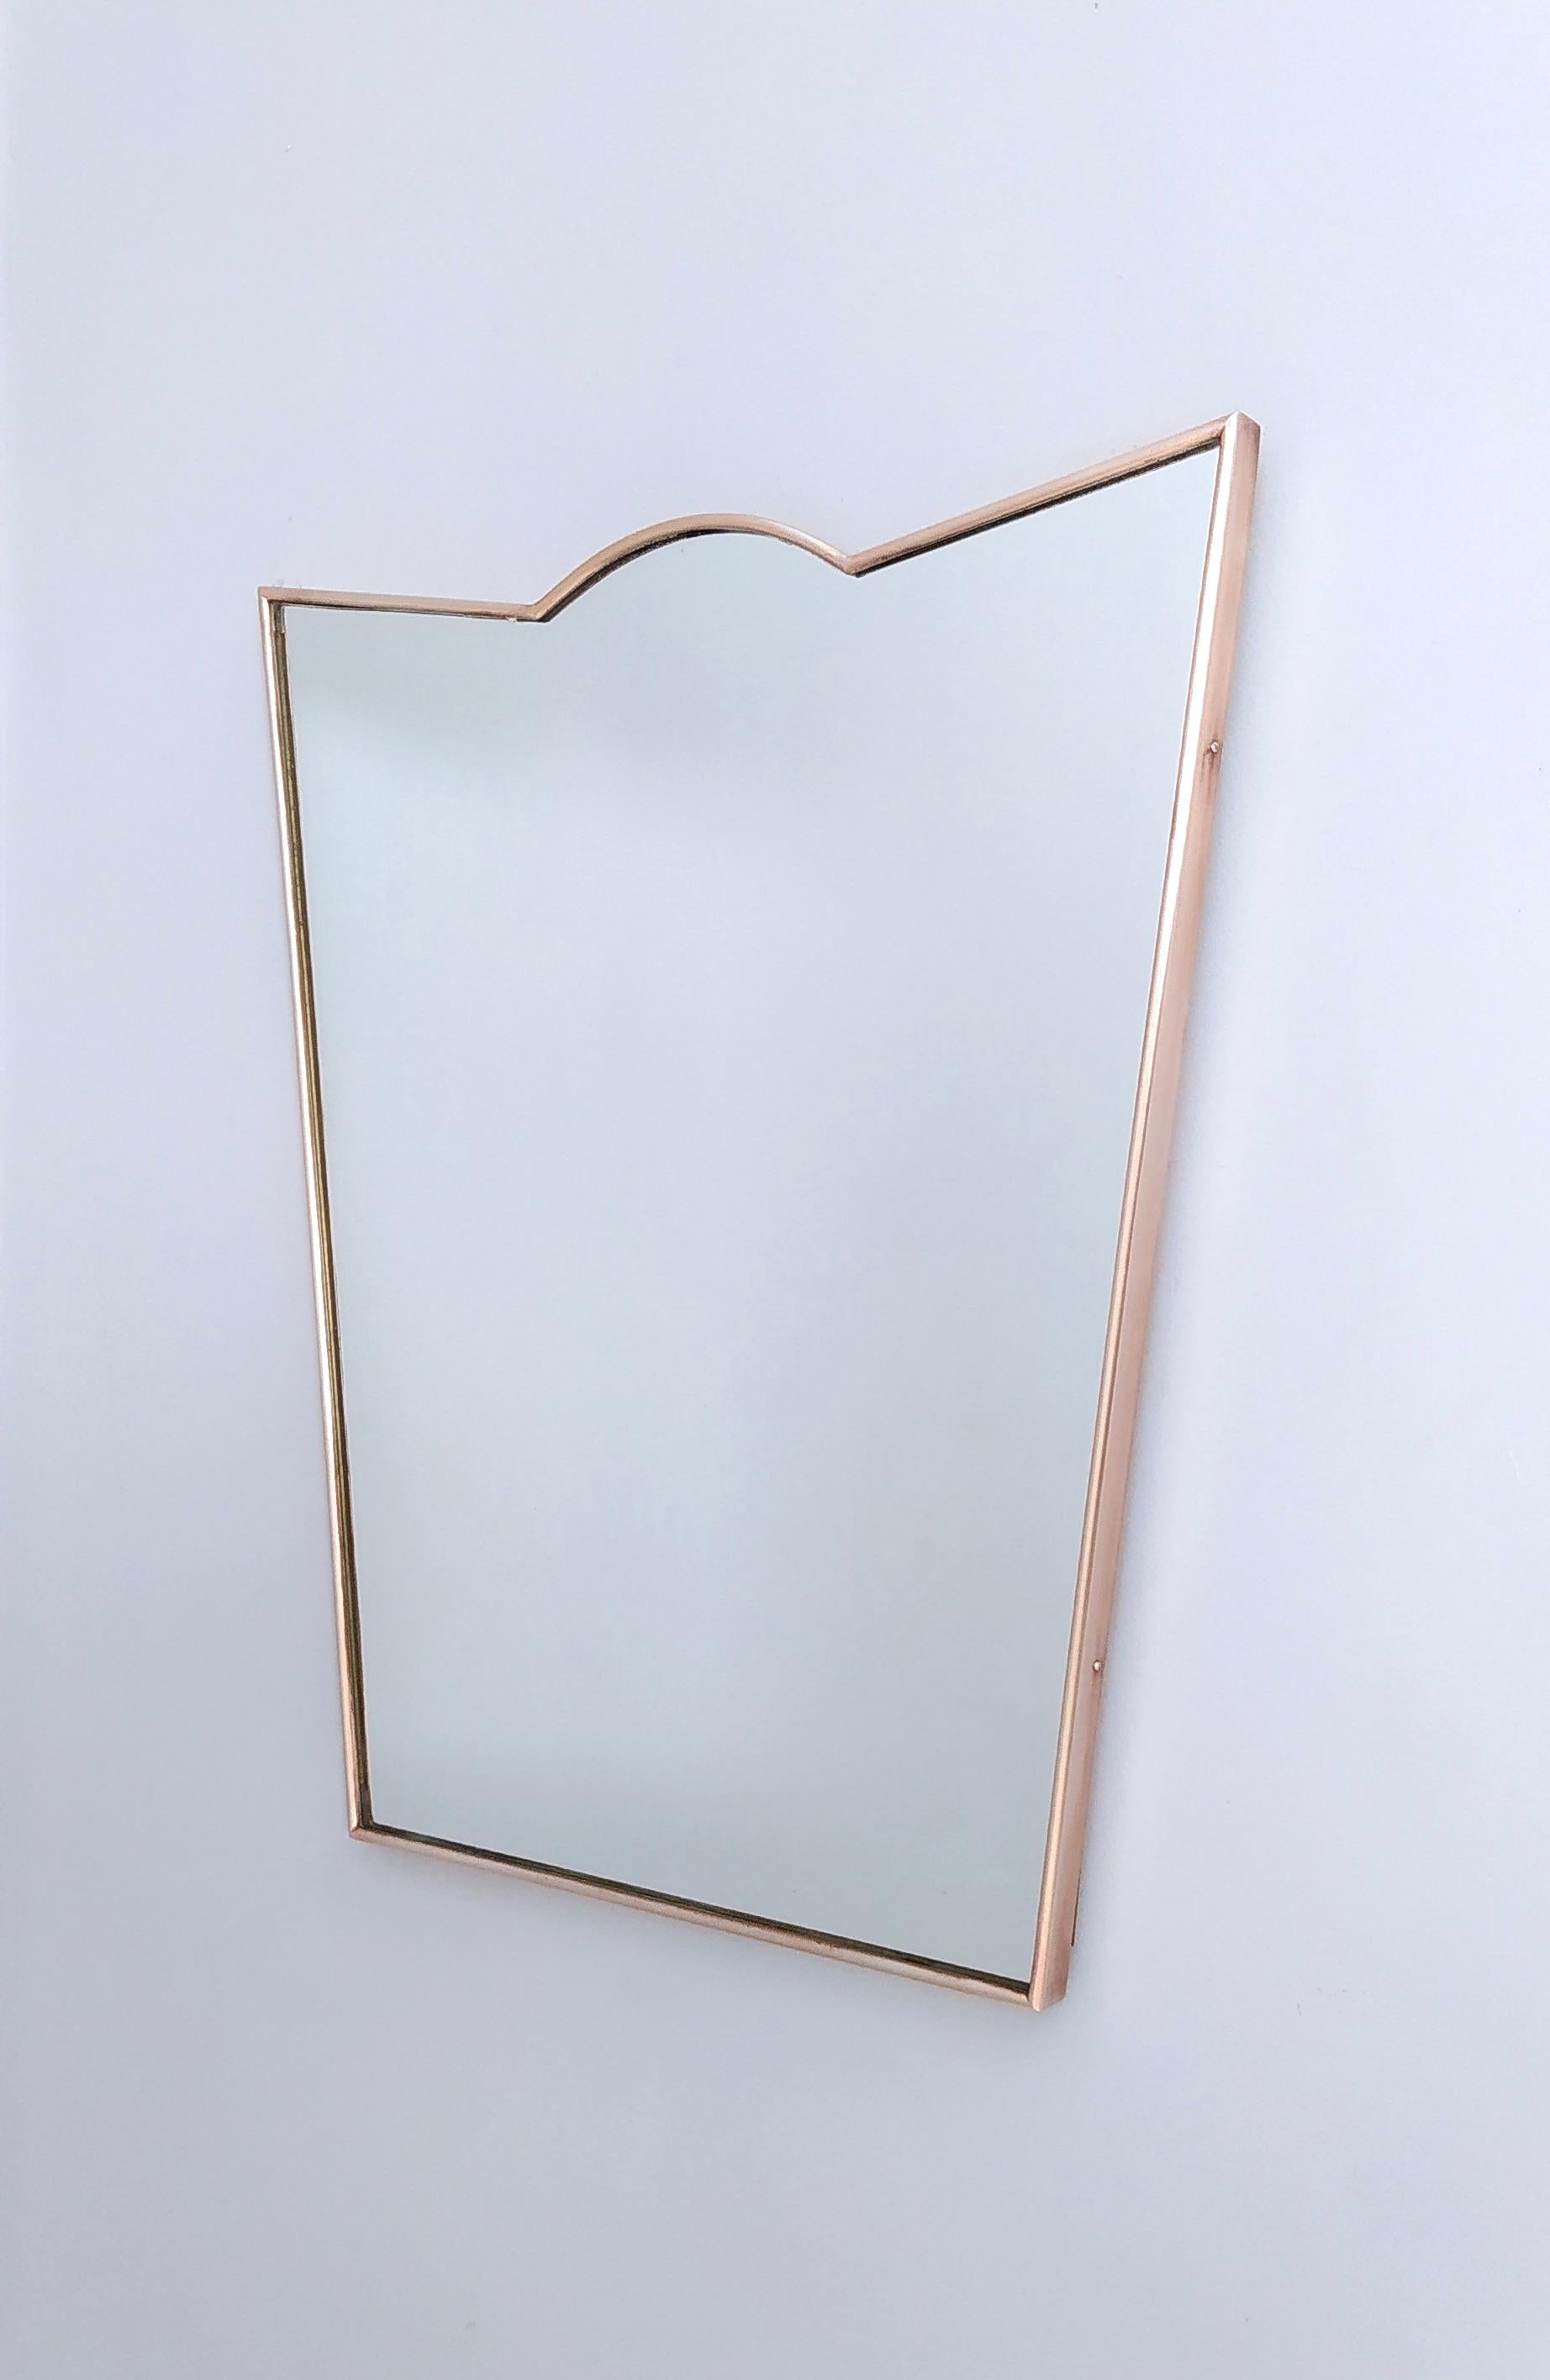 Italian Midcentury Shield Shaped Wall Mirror with Brass Frame, Italy